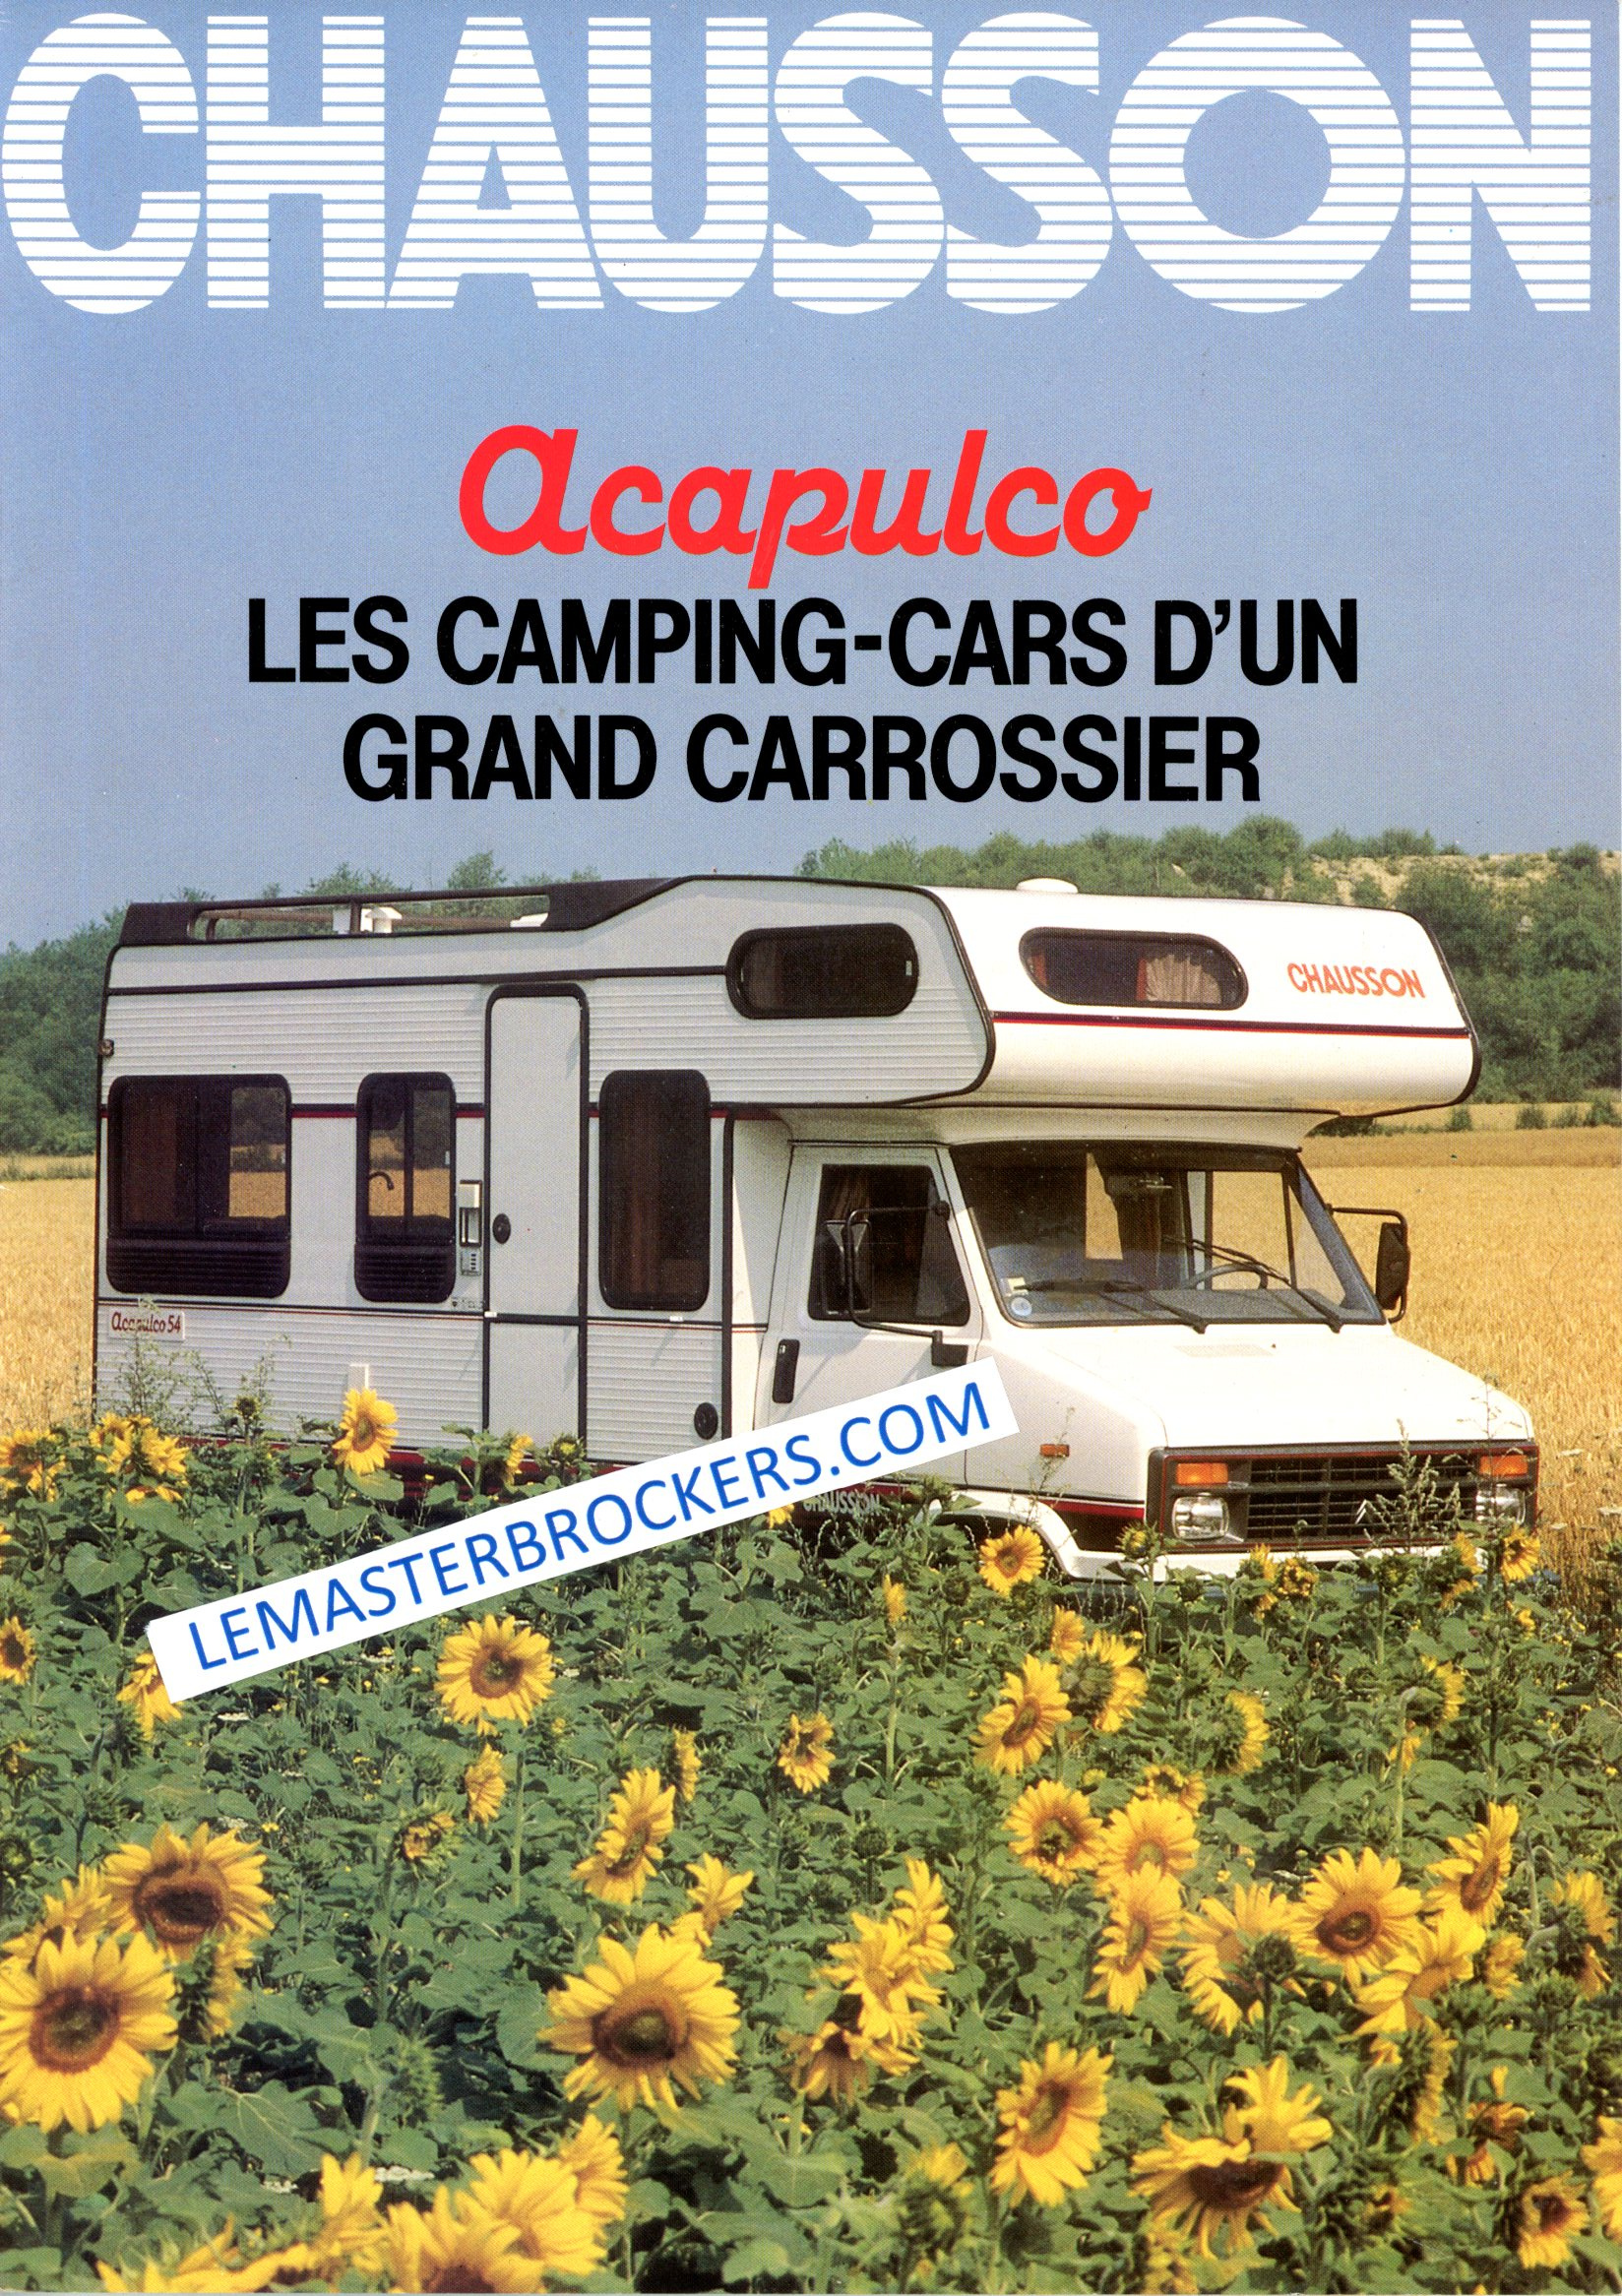 CAMPING-CAR CHAUSSON ACAPULCO BROCHURE 1987